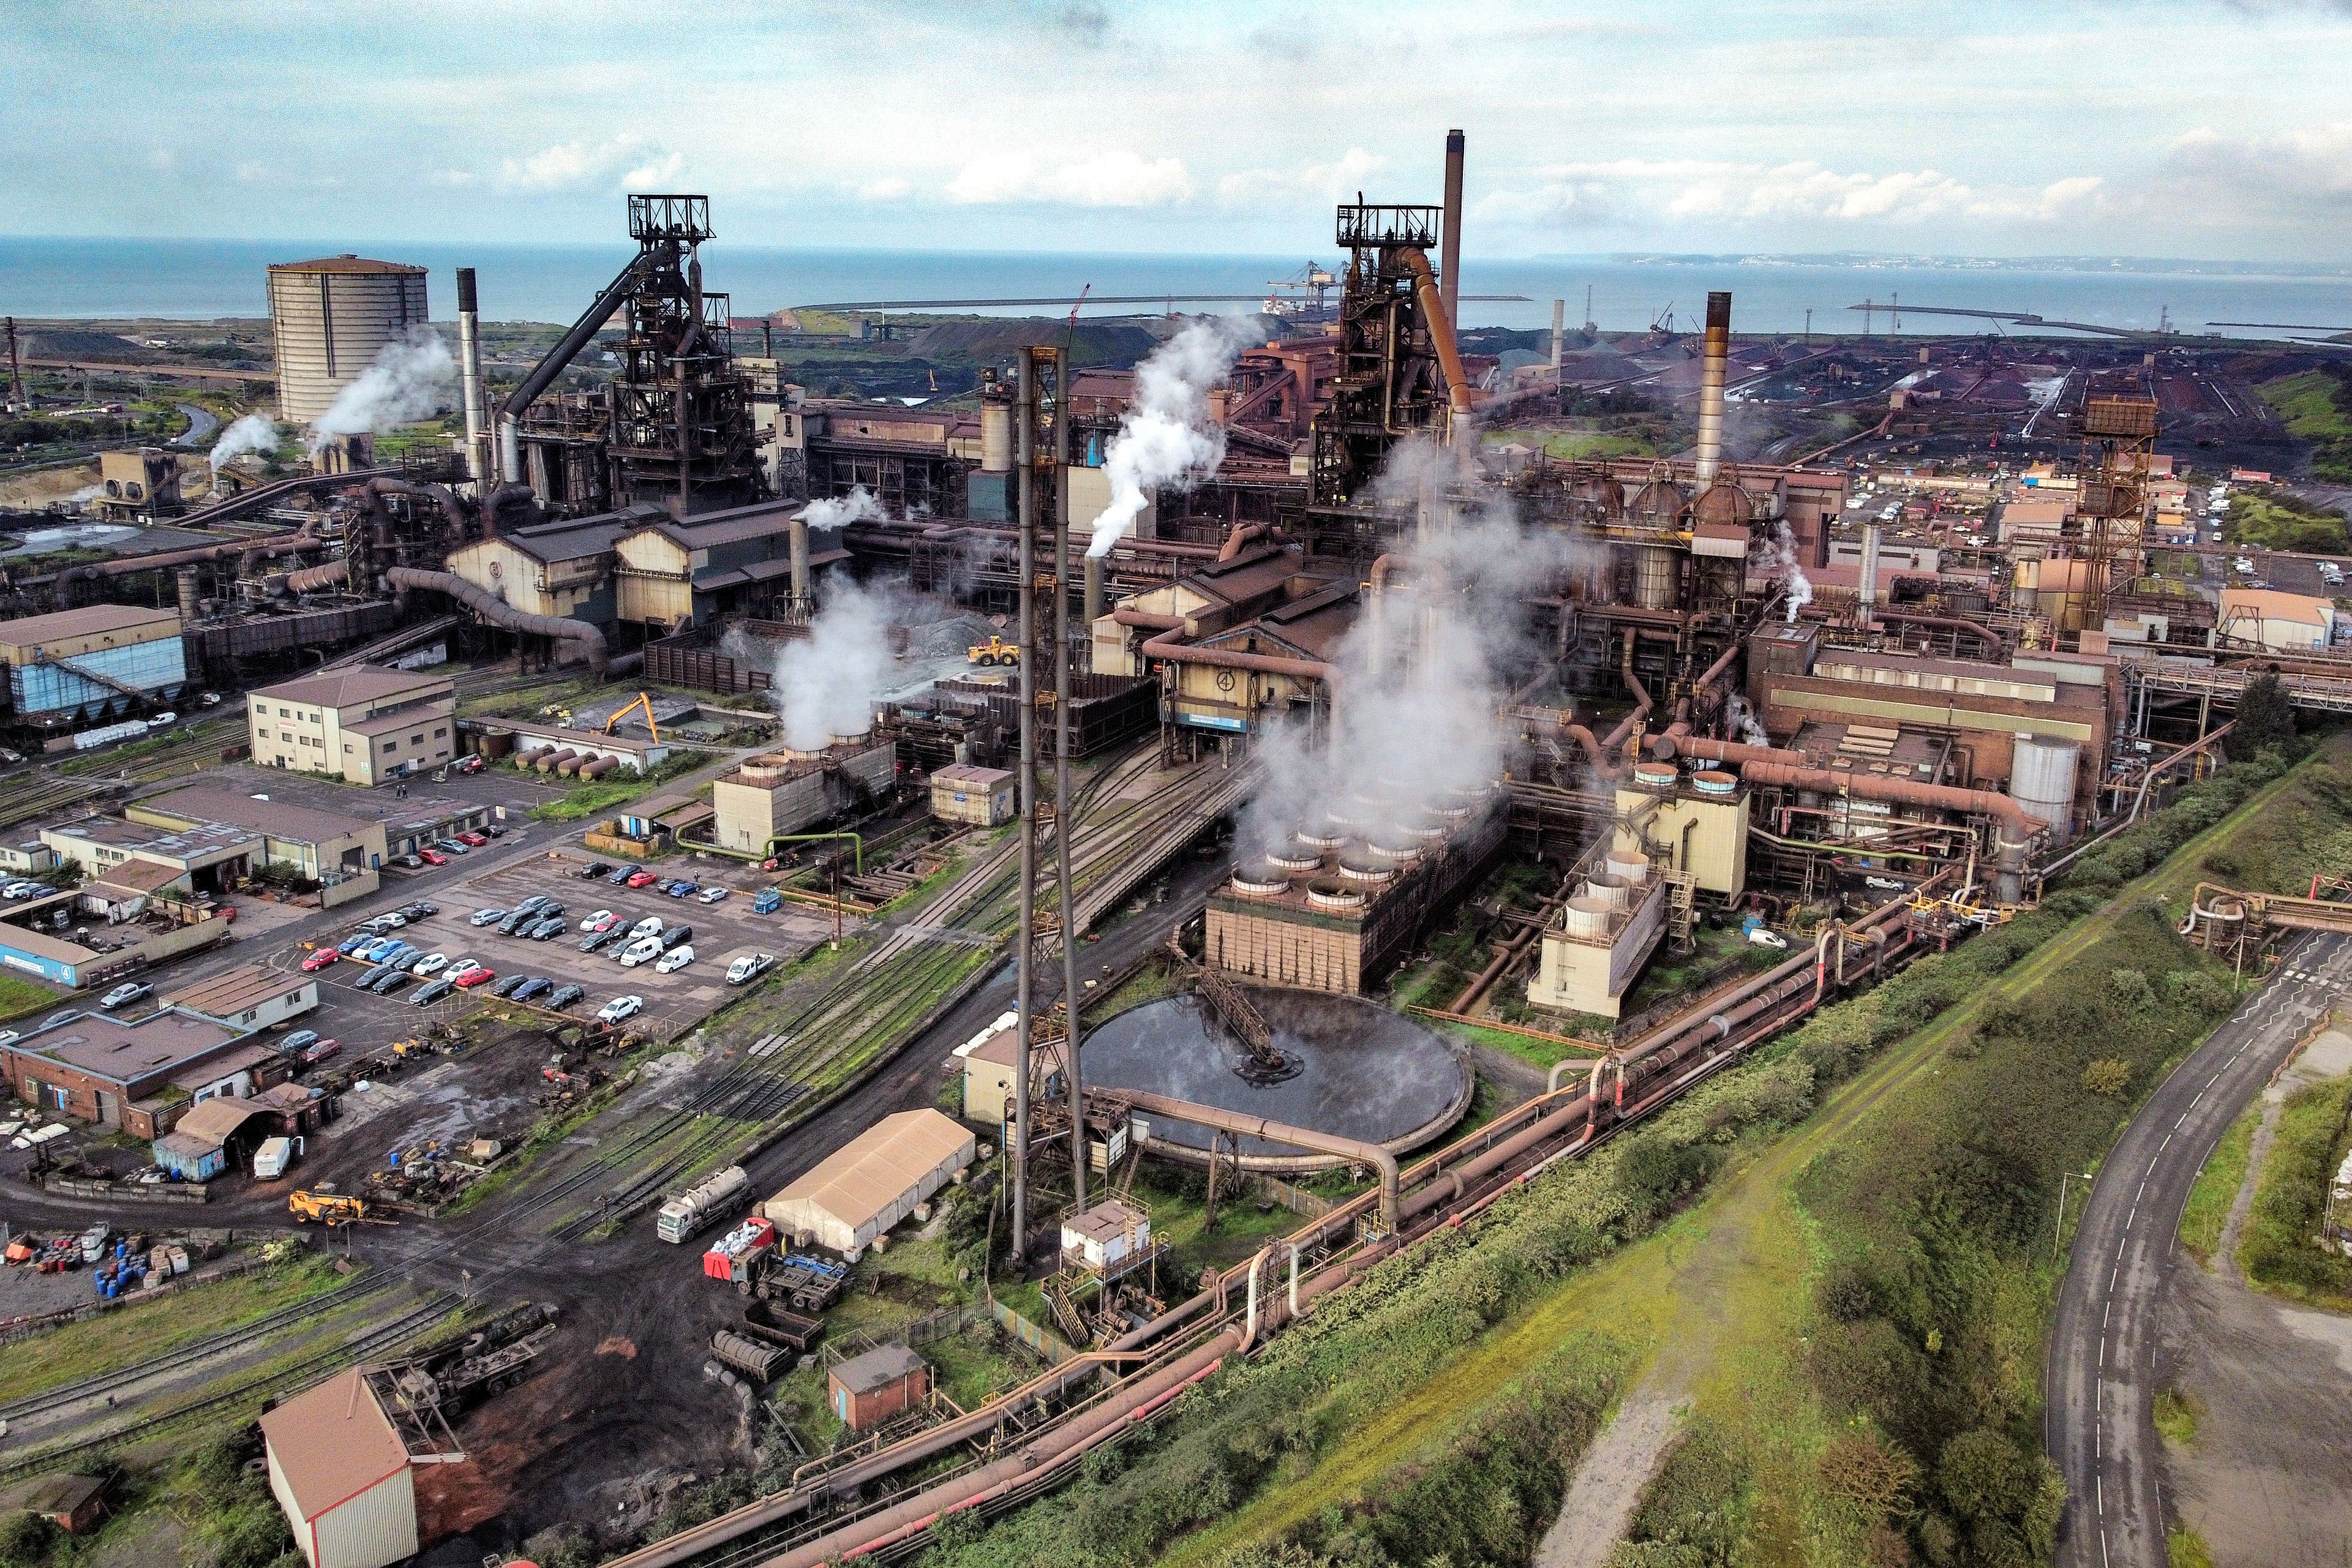 Tata Steel, UK govt announce 1.25 billion pound-joint investment